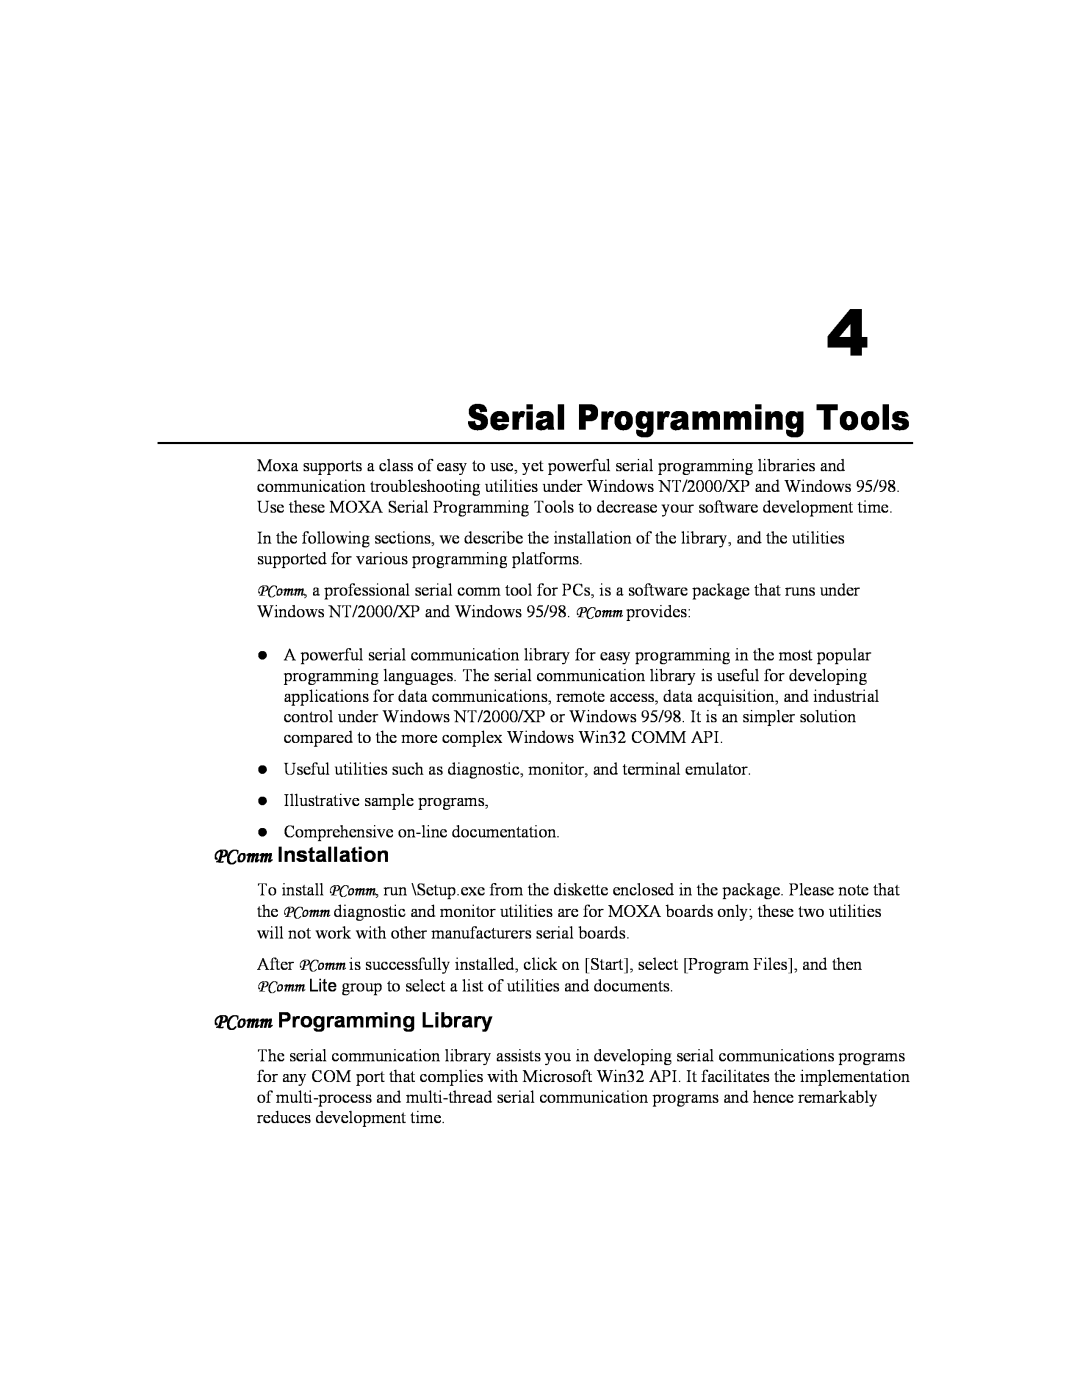 Moxa Technologies CP-104UL user manual Serial Programming Tools, PComm Installation, PComm Programming Library 